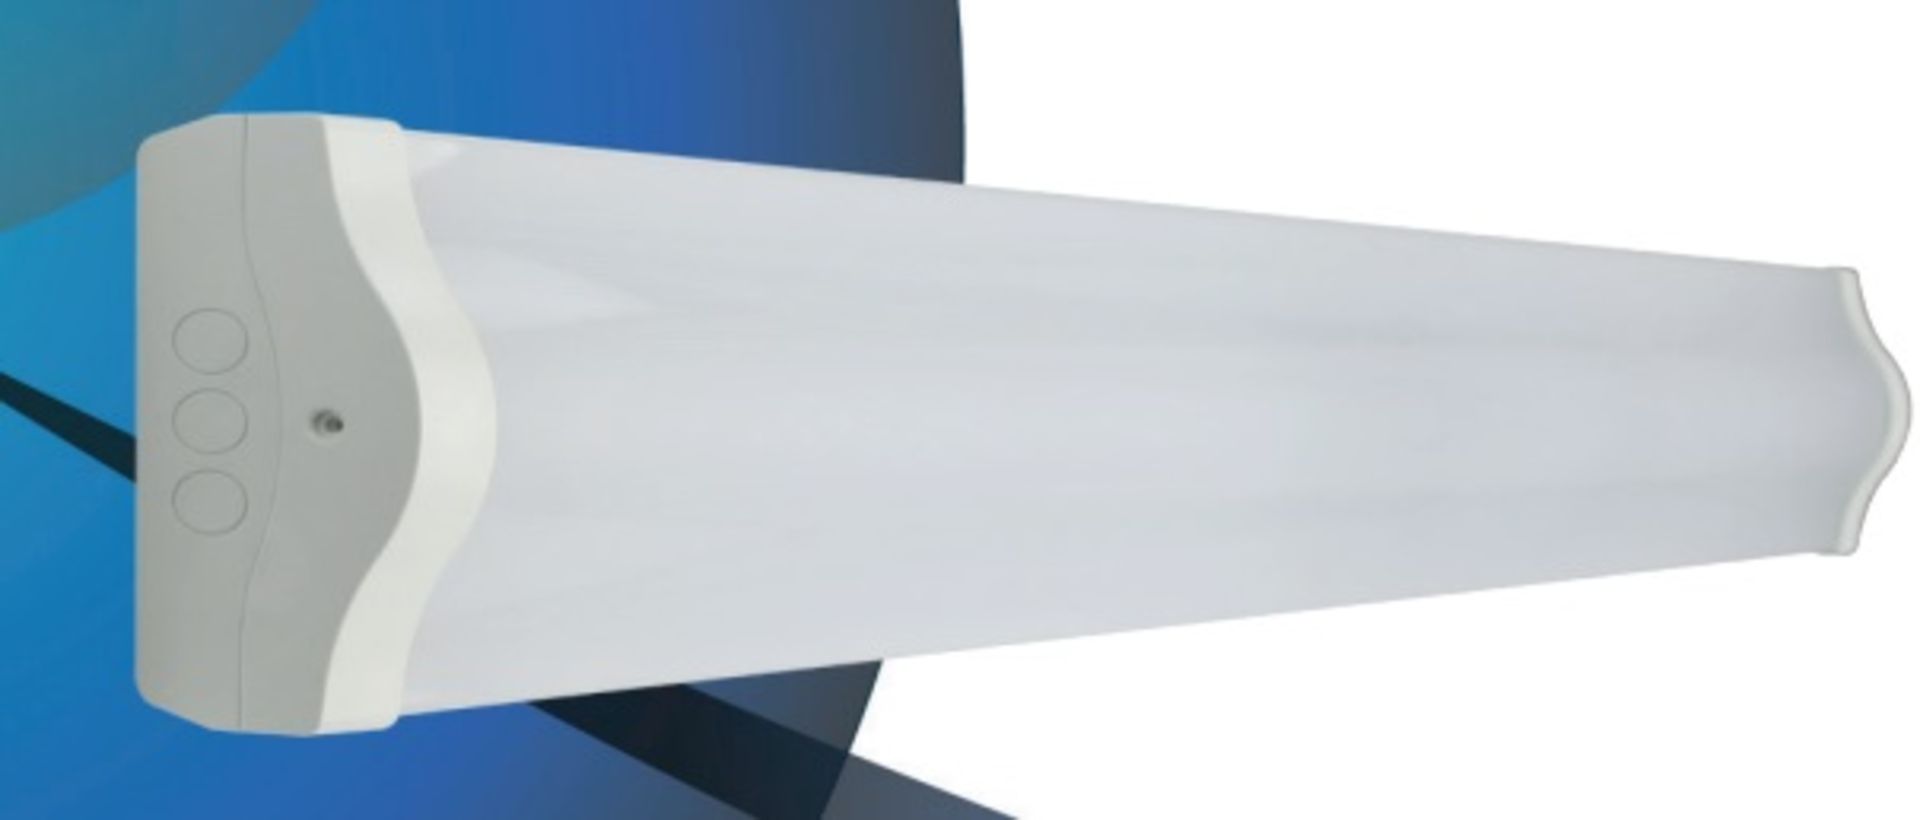 44 x Scholar Luminaire 4ft Emergency LED Lights | SCH30/M3/840 | Total Cost £1,072